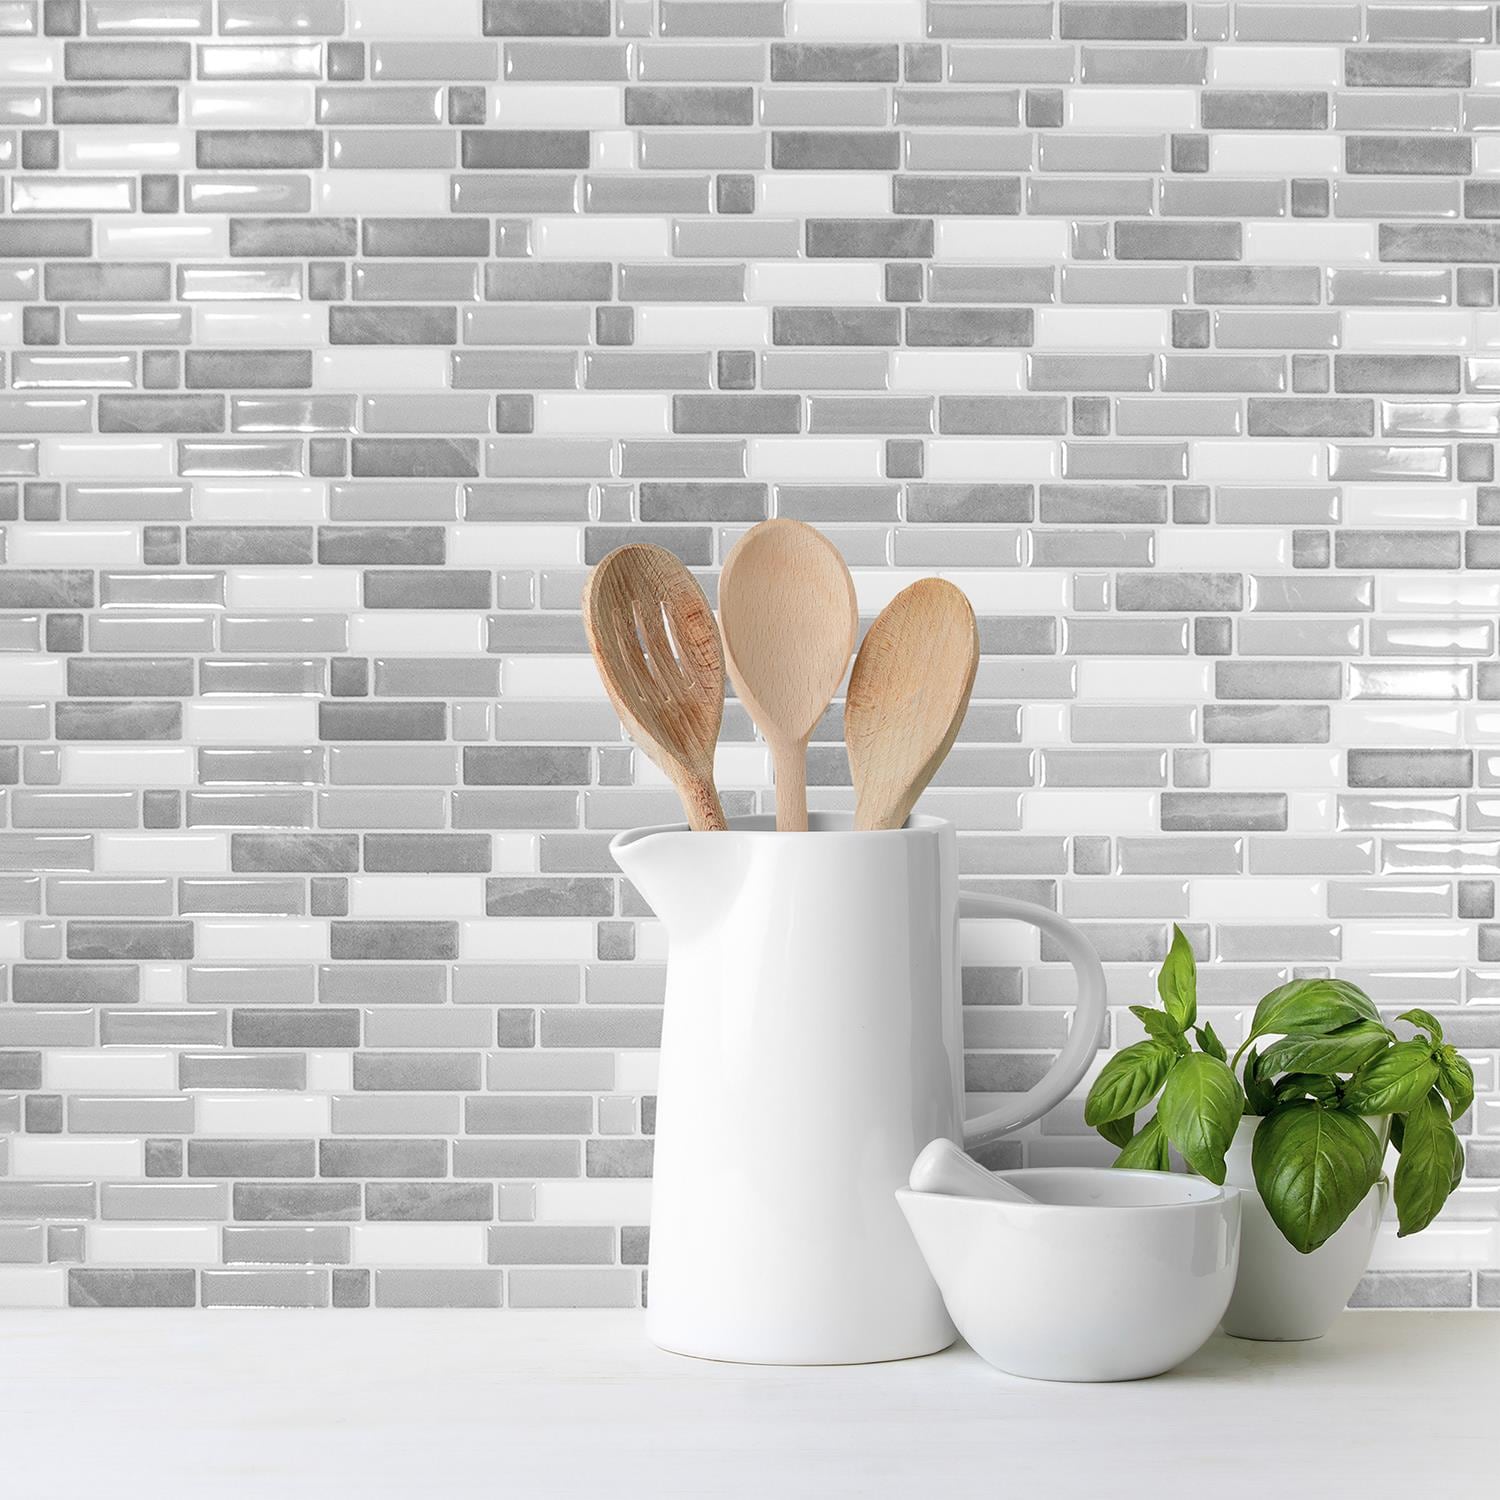 Smart Tiles Milano Massa Carrara Marble Peel and Stick Backsplash